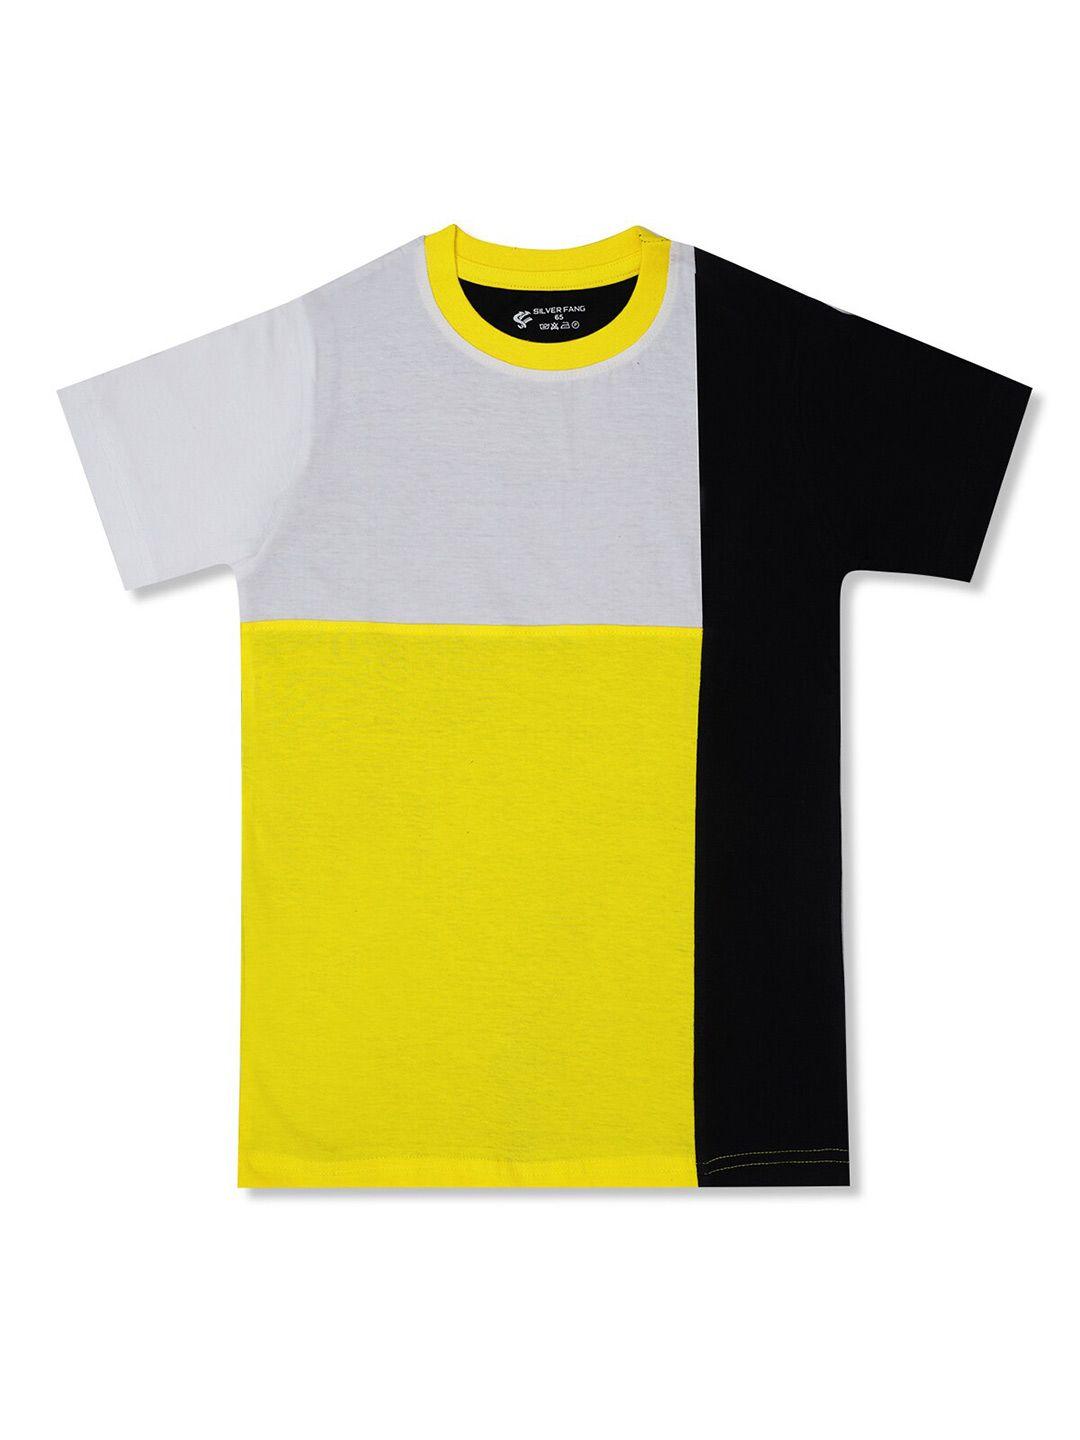 silver fang boys black & yellow colourblocked t-shirt